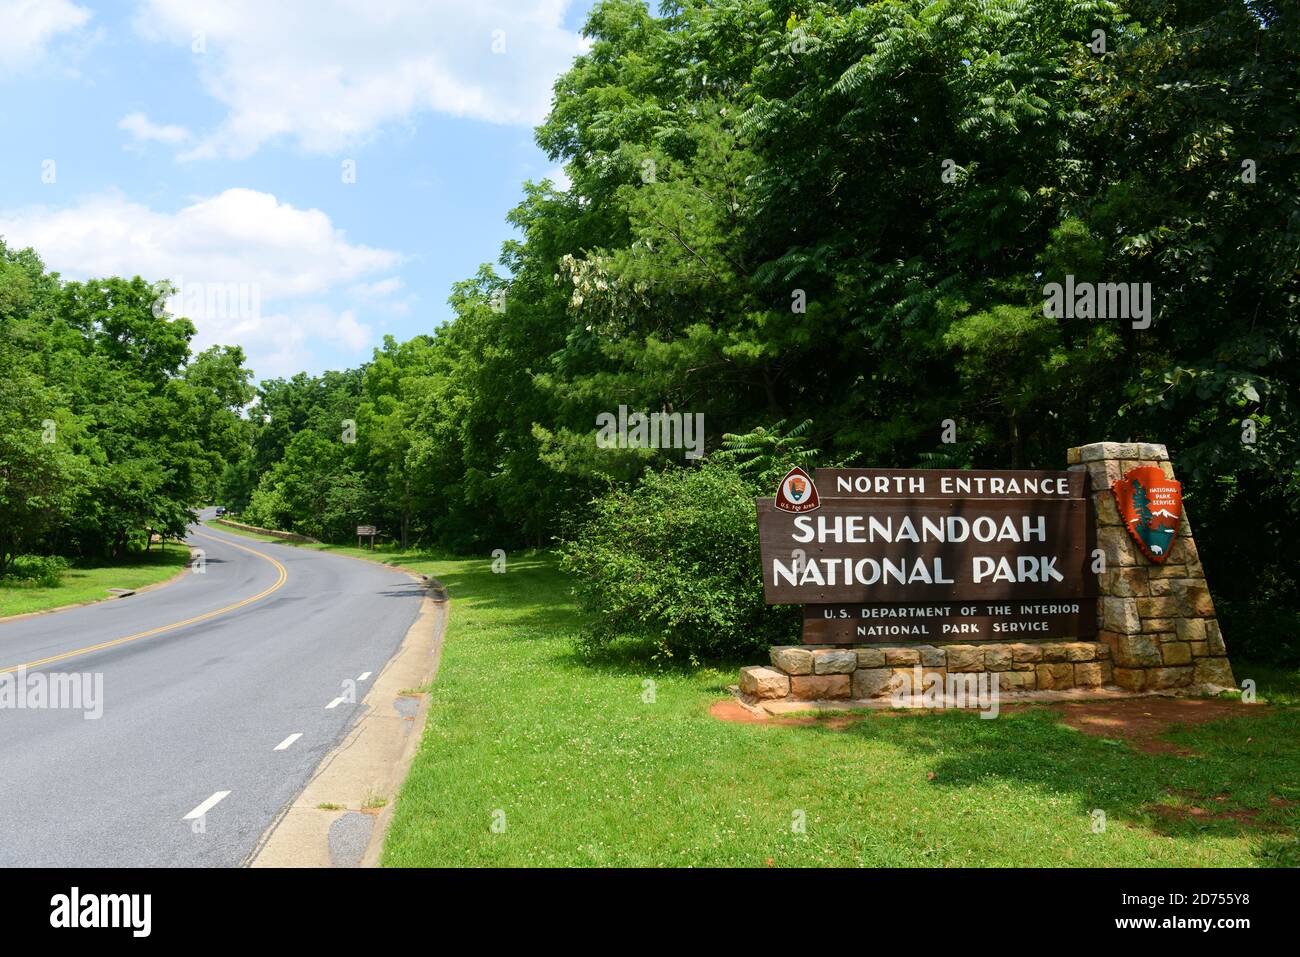 Shenandoah National Park North Entrance Sign in Virginia, USA. Shenandoah National Park is a part of Blue Ridge Mountains in Virginia. Stock Photo